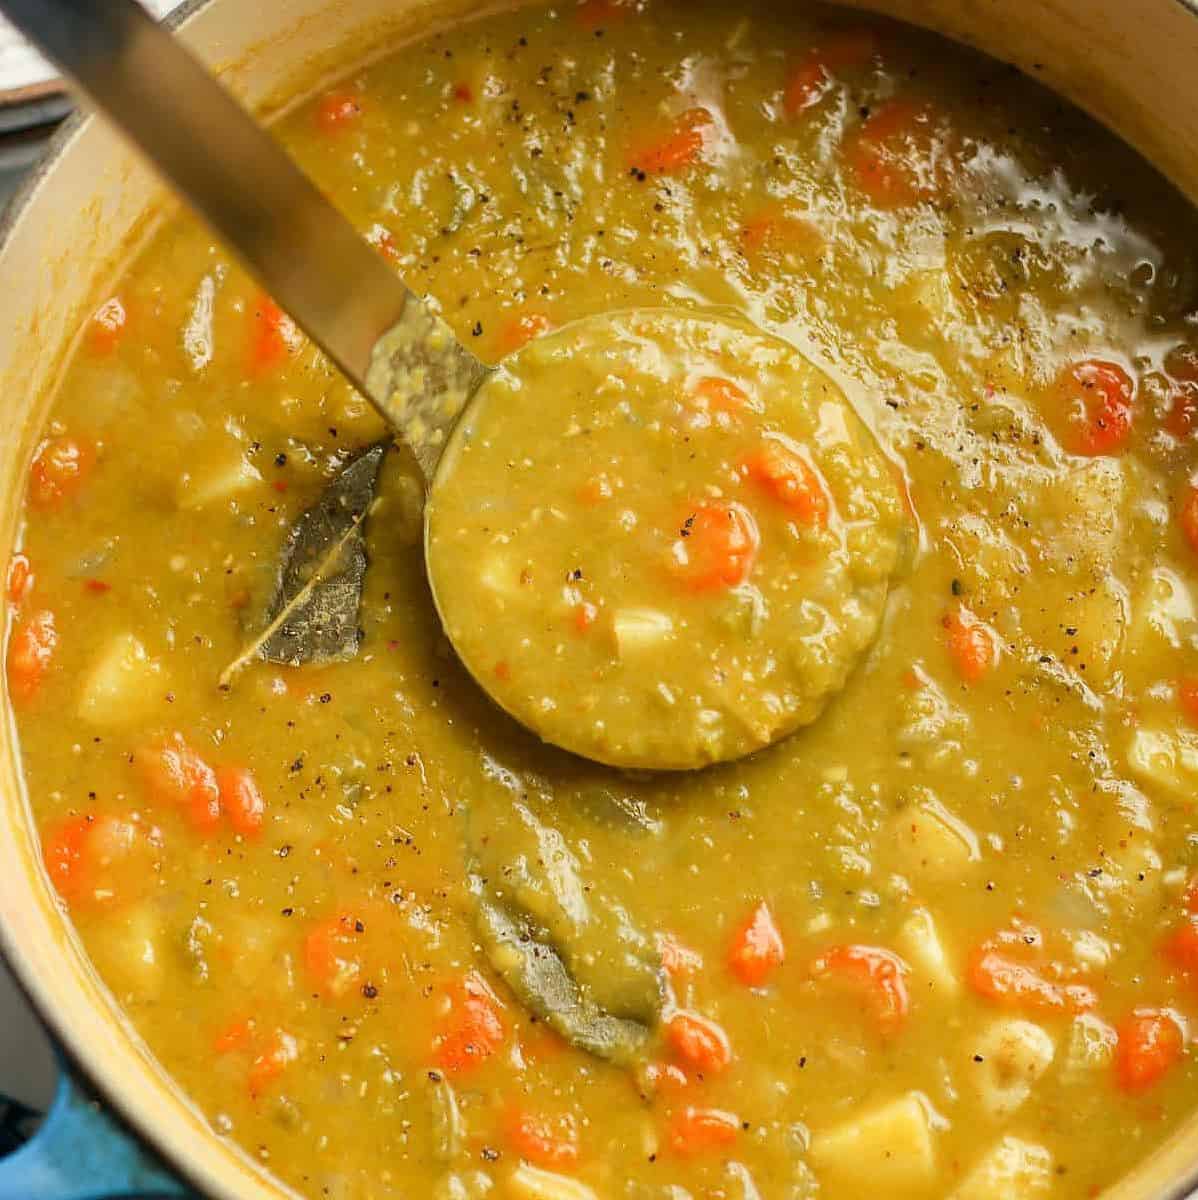  The classic Split Pea Soup recipe made vegetarian.